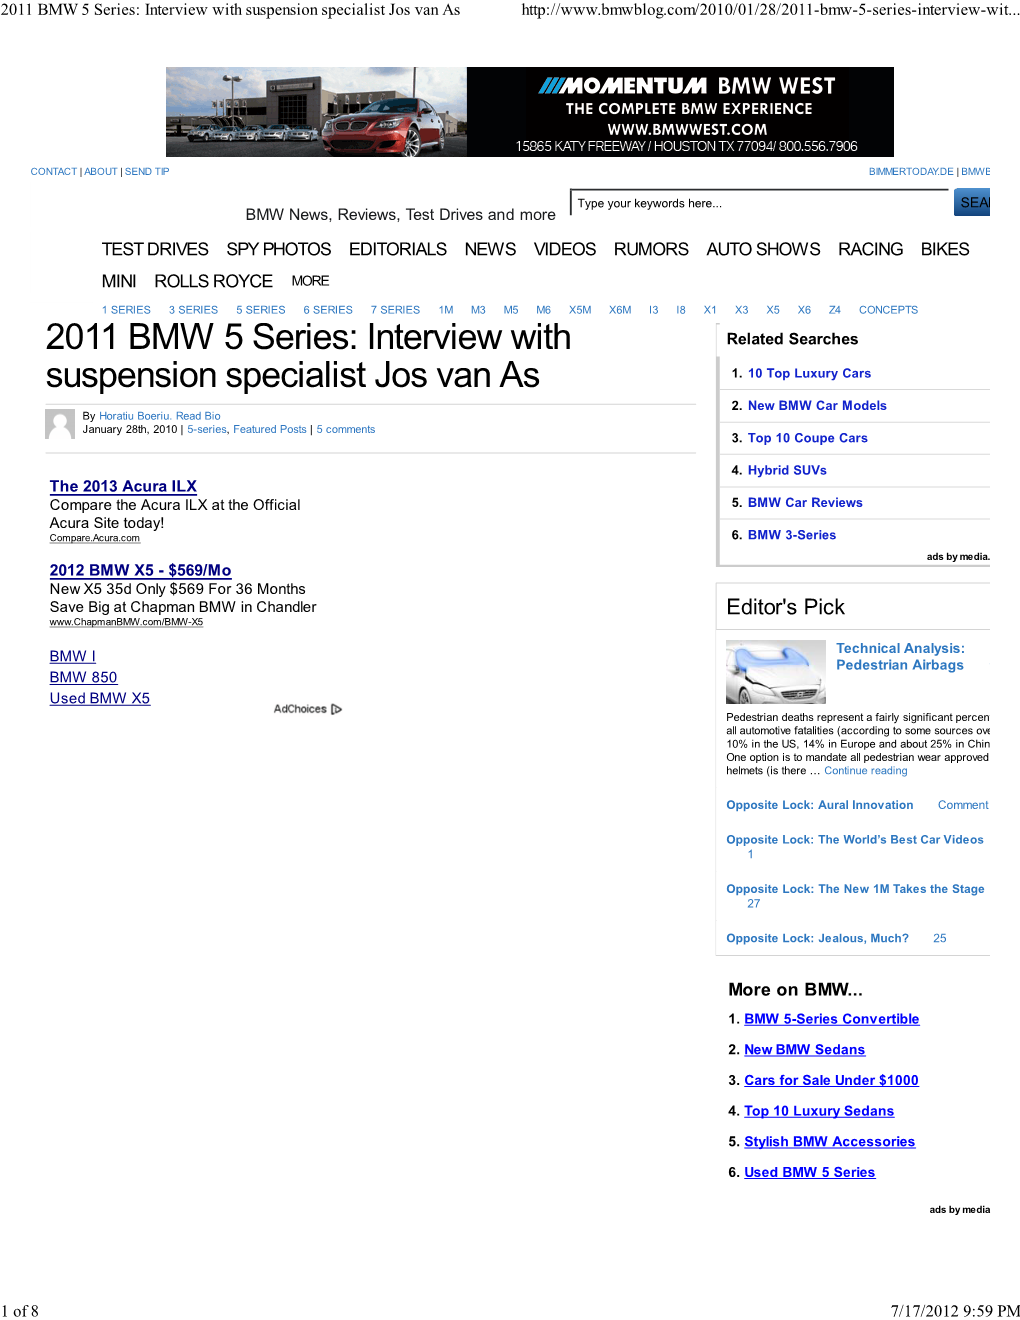 2011 BMW 5 Series: Interview with Suspension Specialist Jos Van As